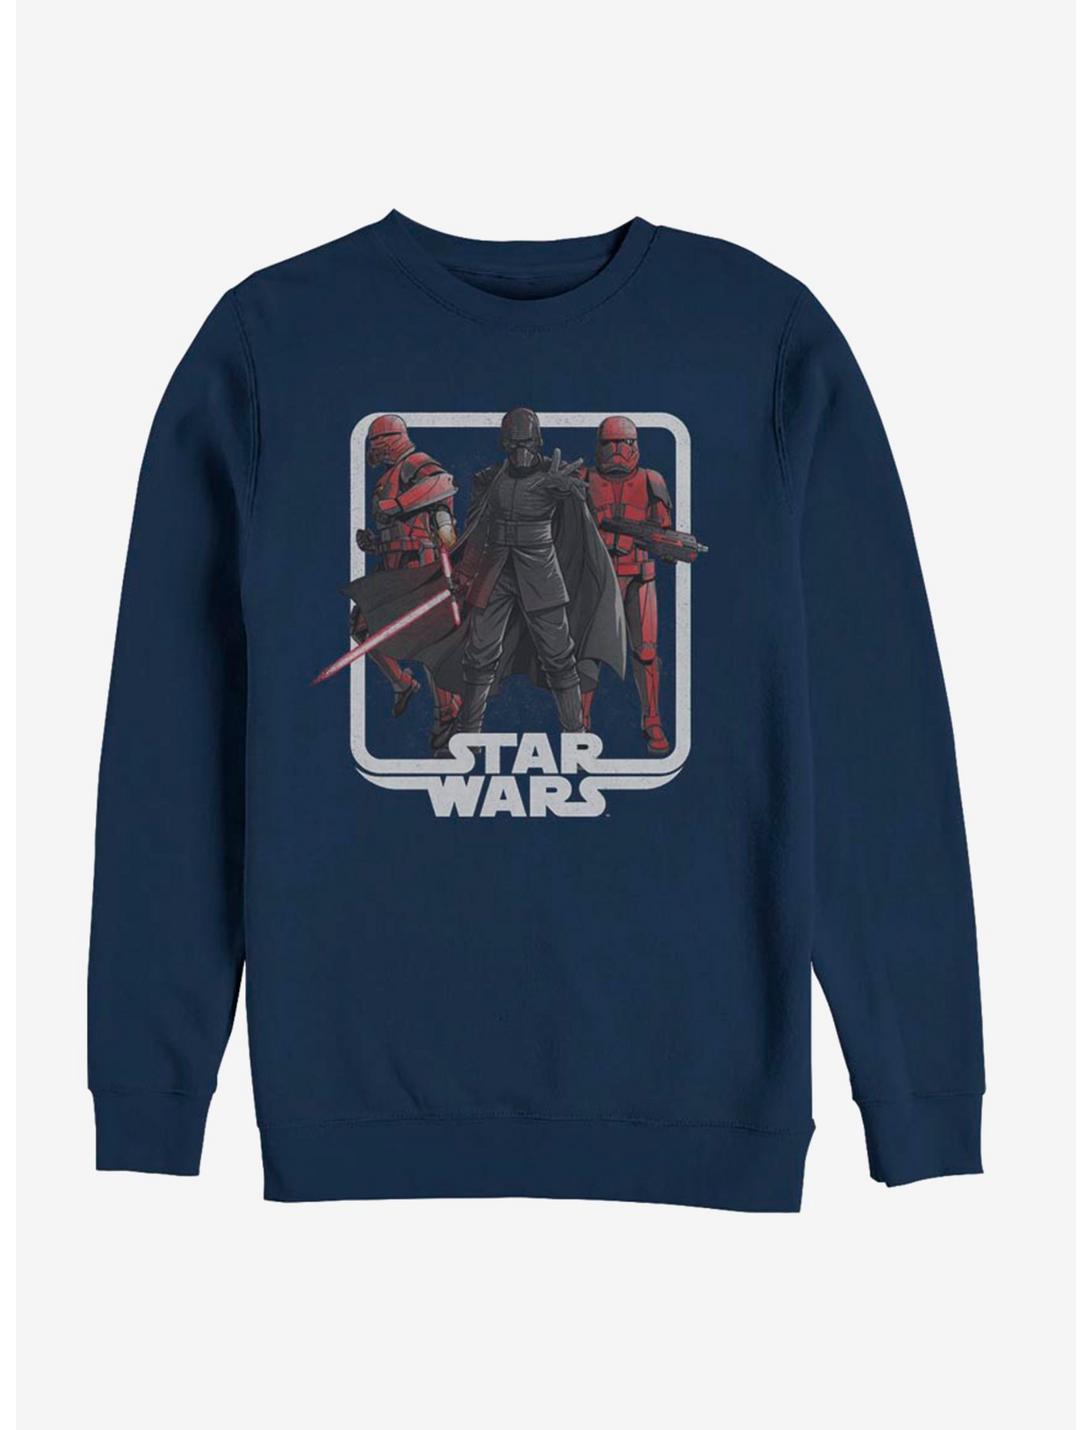 Star Wars Episode IX The Rise Of Skywalker Vindication Sweatshirt, NAVY, hi-res